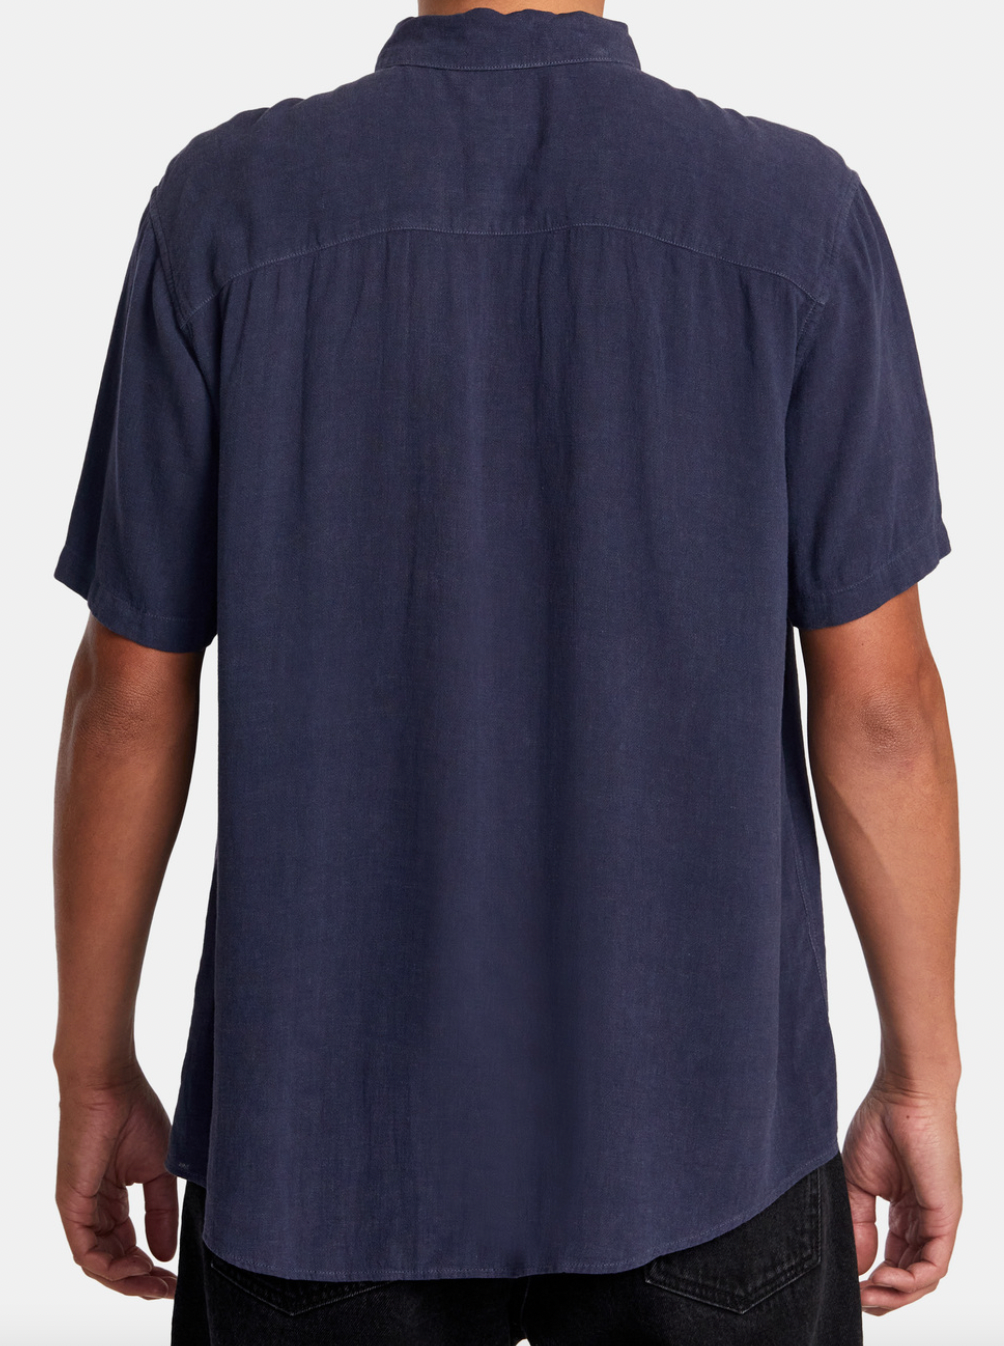 PTC Woven Short Sleeve Shirt - MOODY BLUE